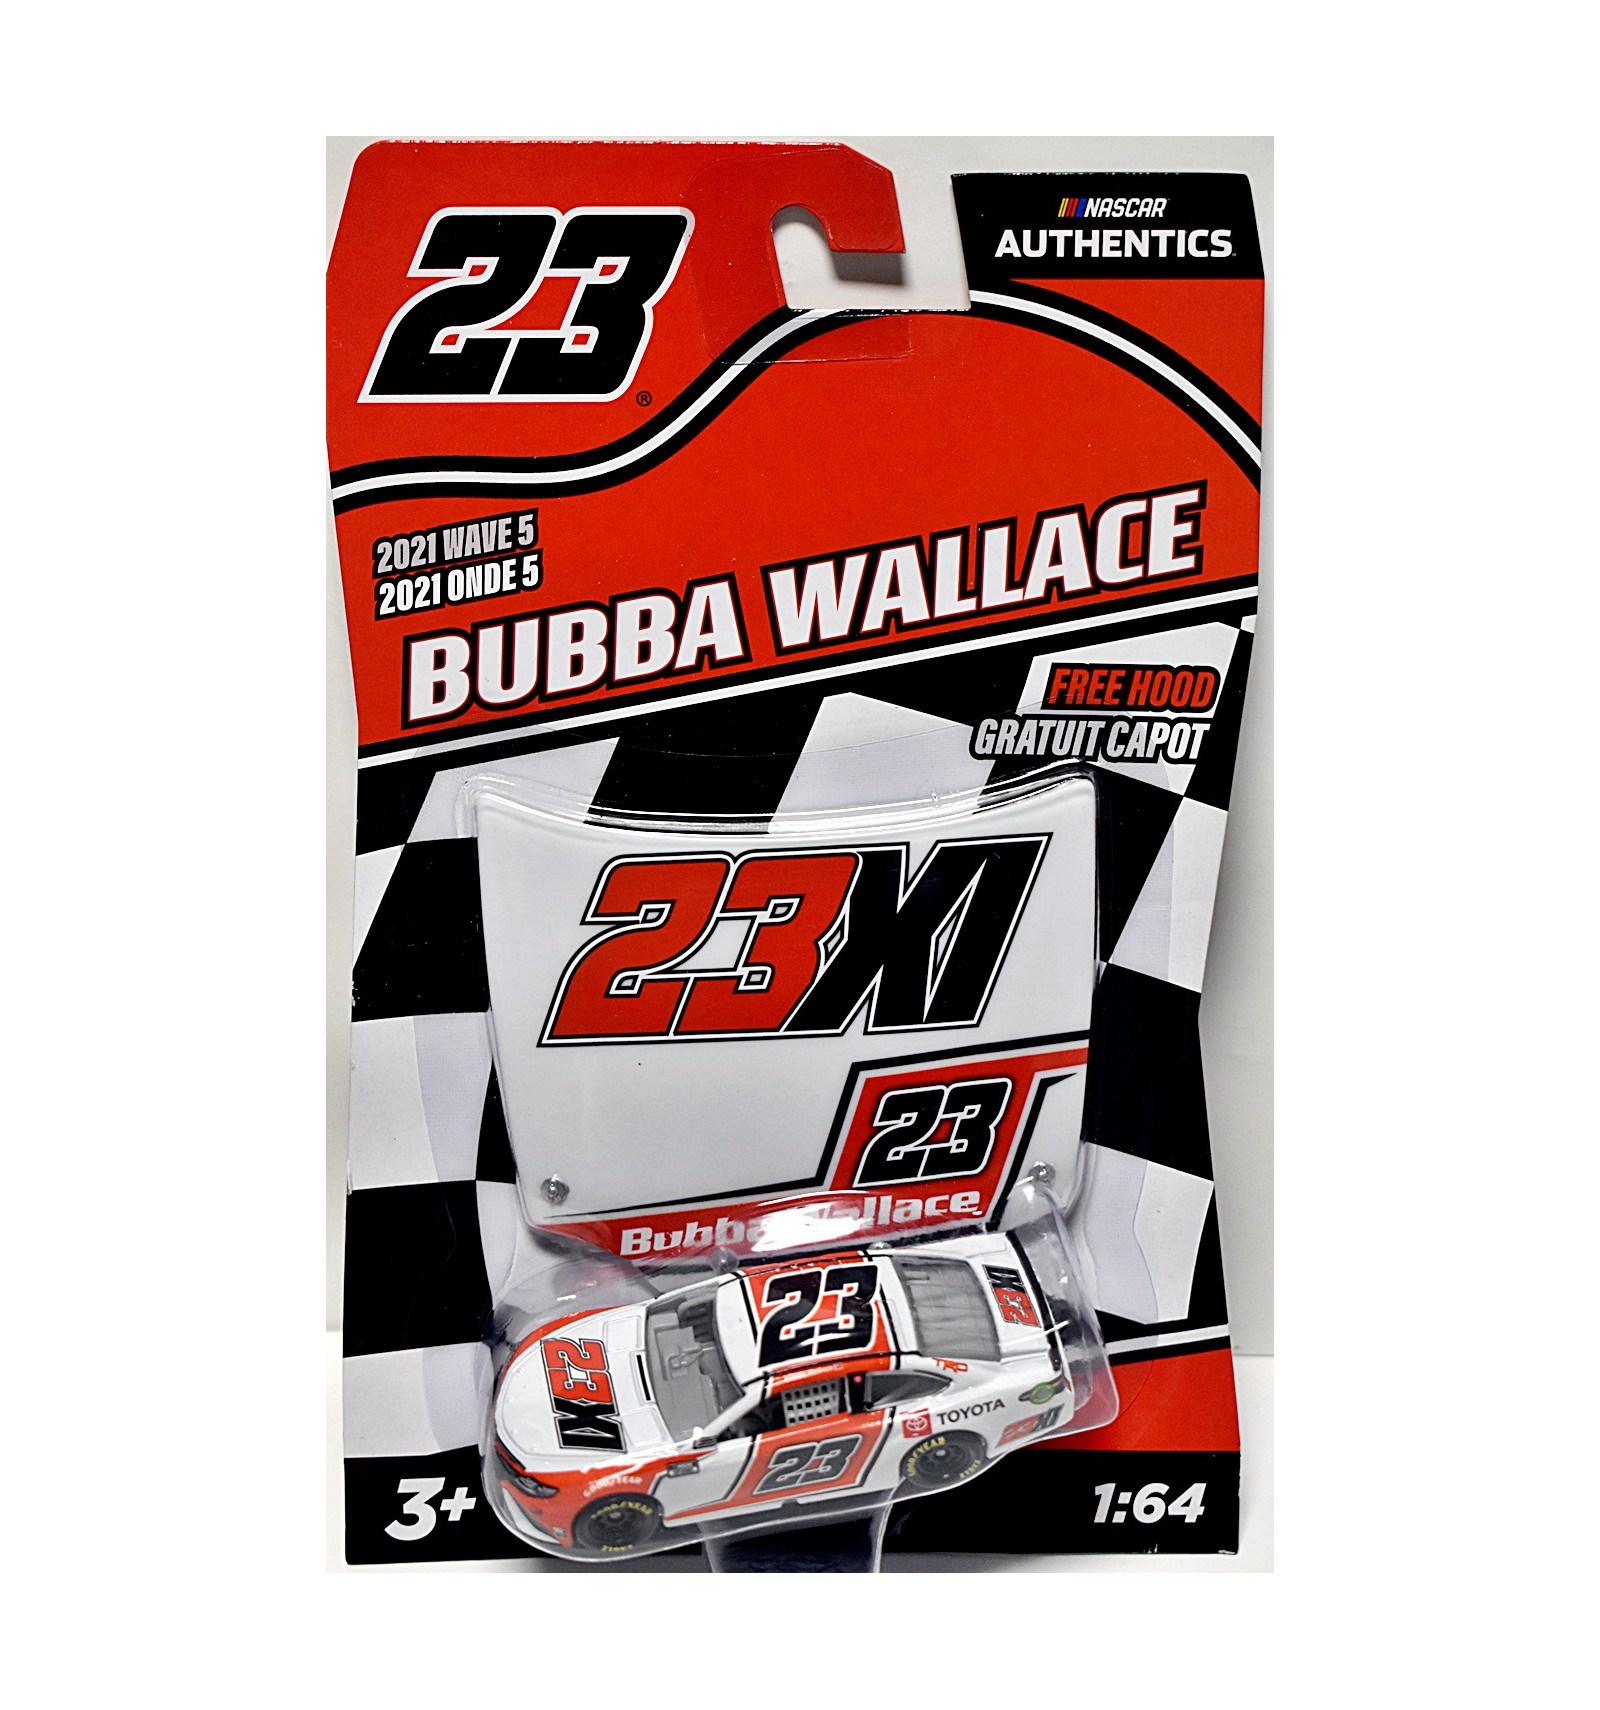 2021 Wave 5 Bubba Wallace Toyota 23XI Racing Show Car 1/64 NASCAR Authentics 